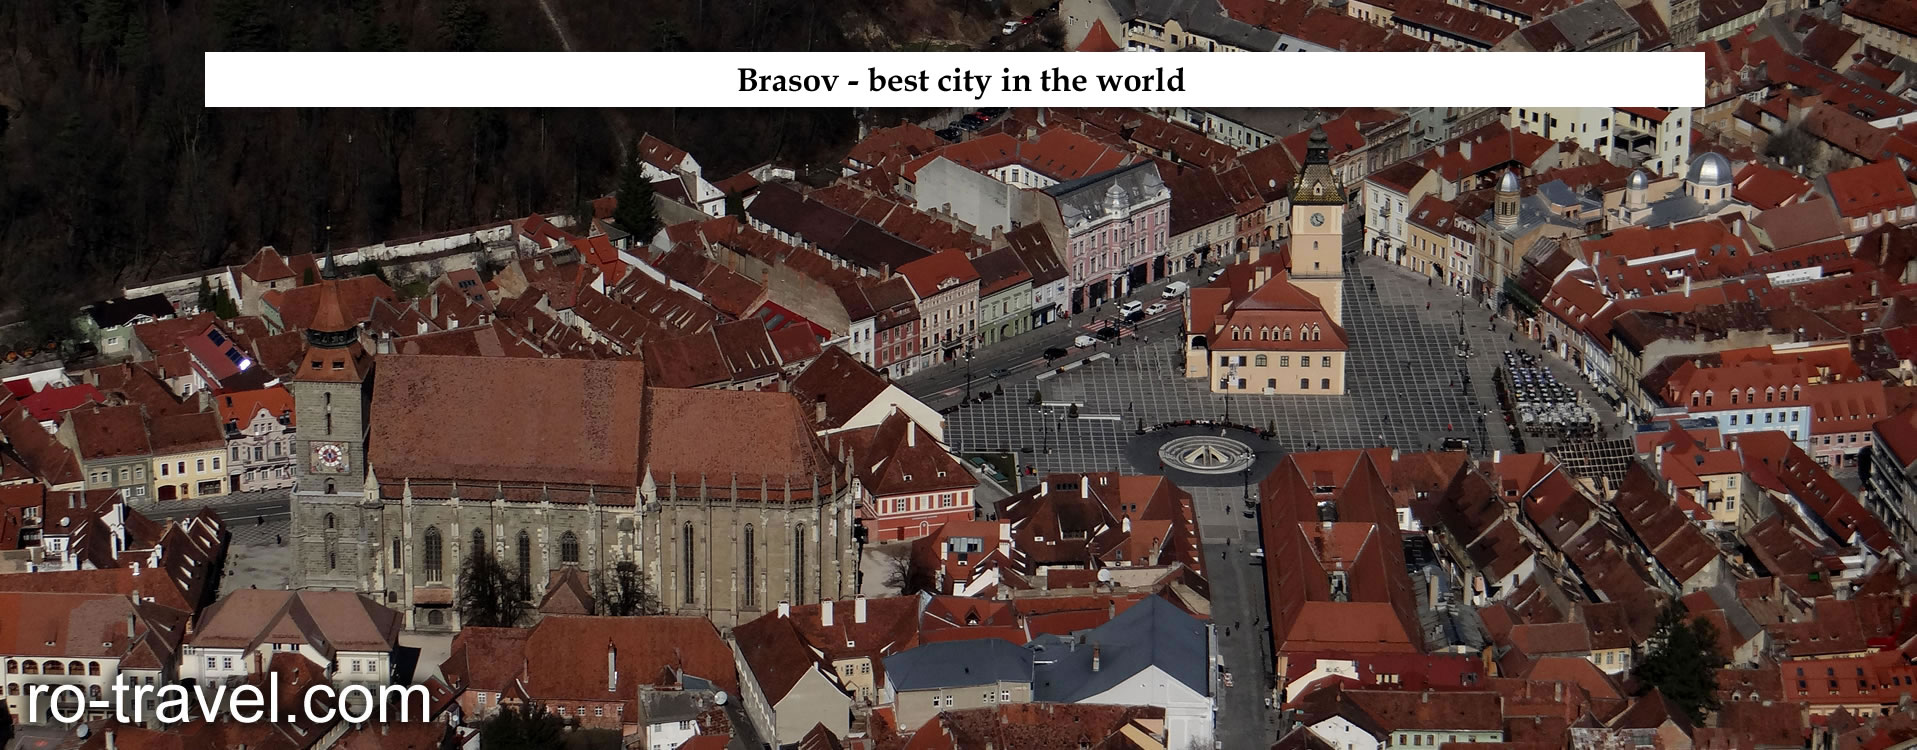 Brasov best city in the world